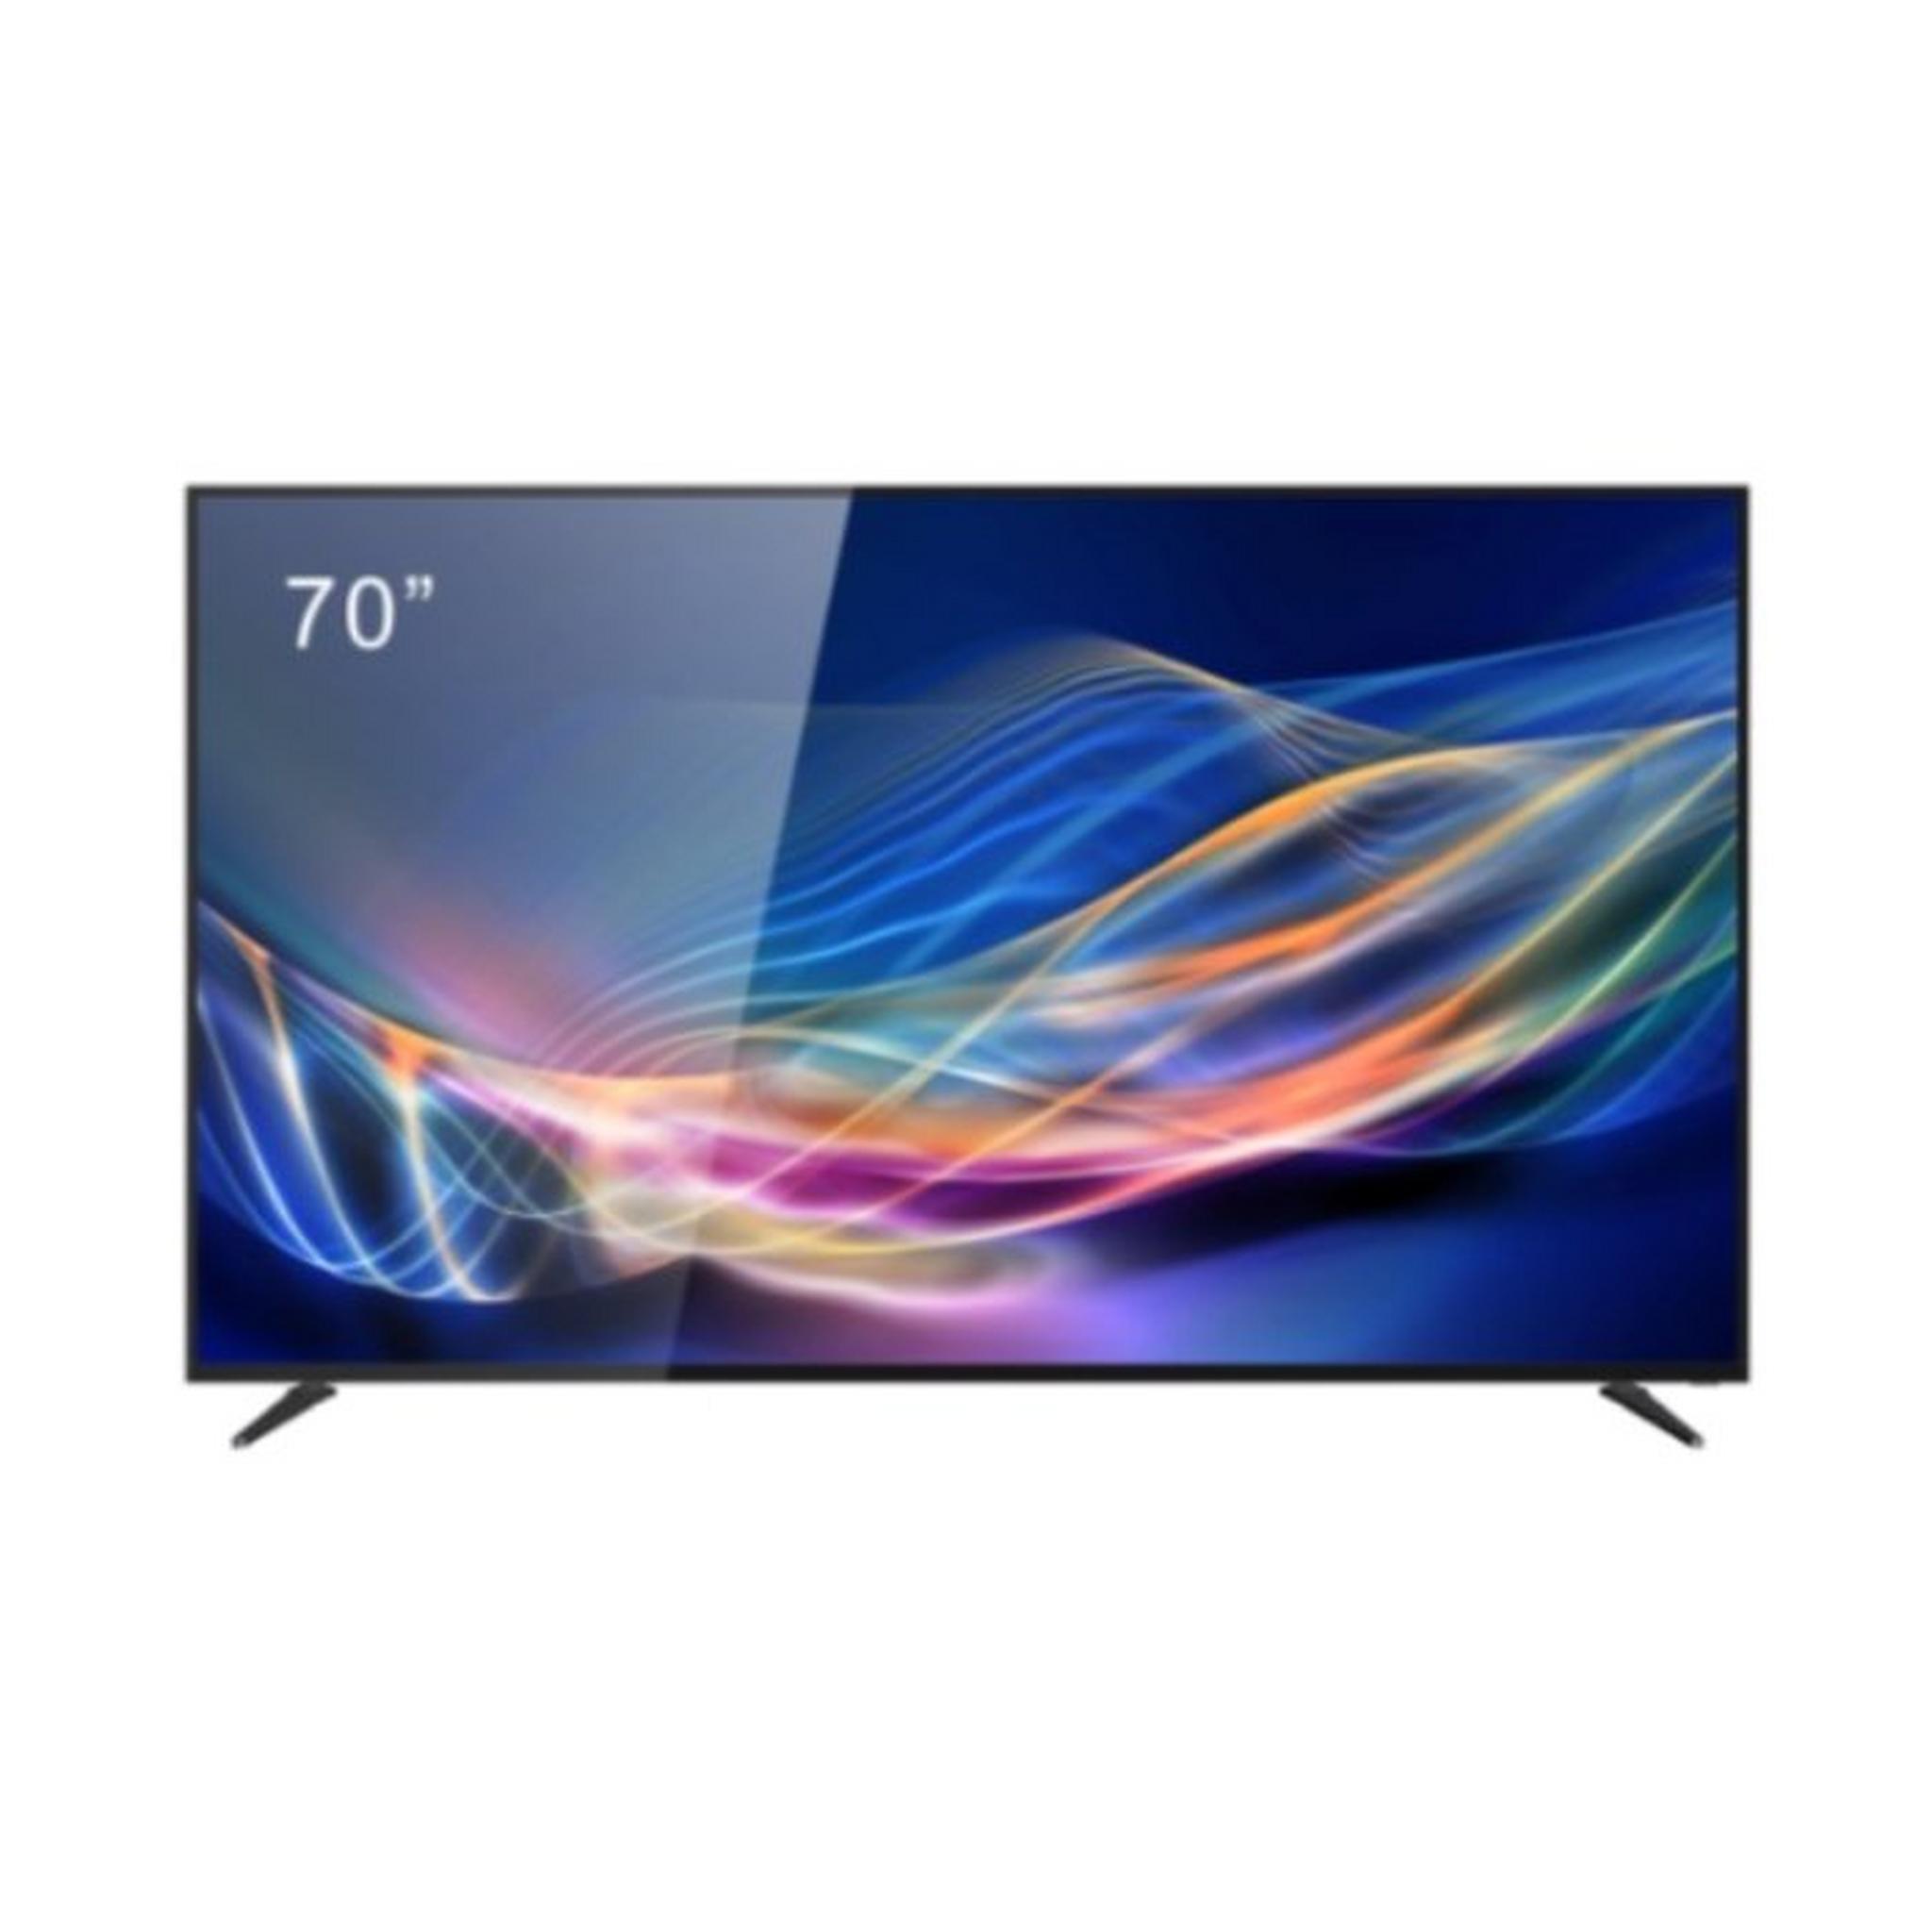 Wansa TV 70-inch 4K UHD Smart LED (WUD70I8863S)